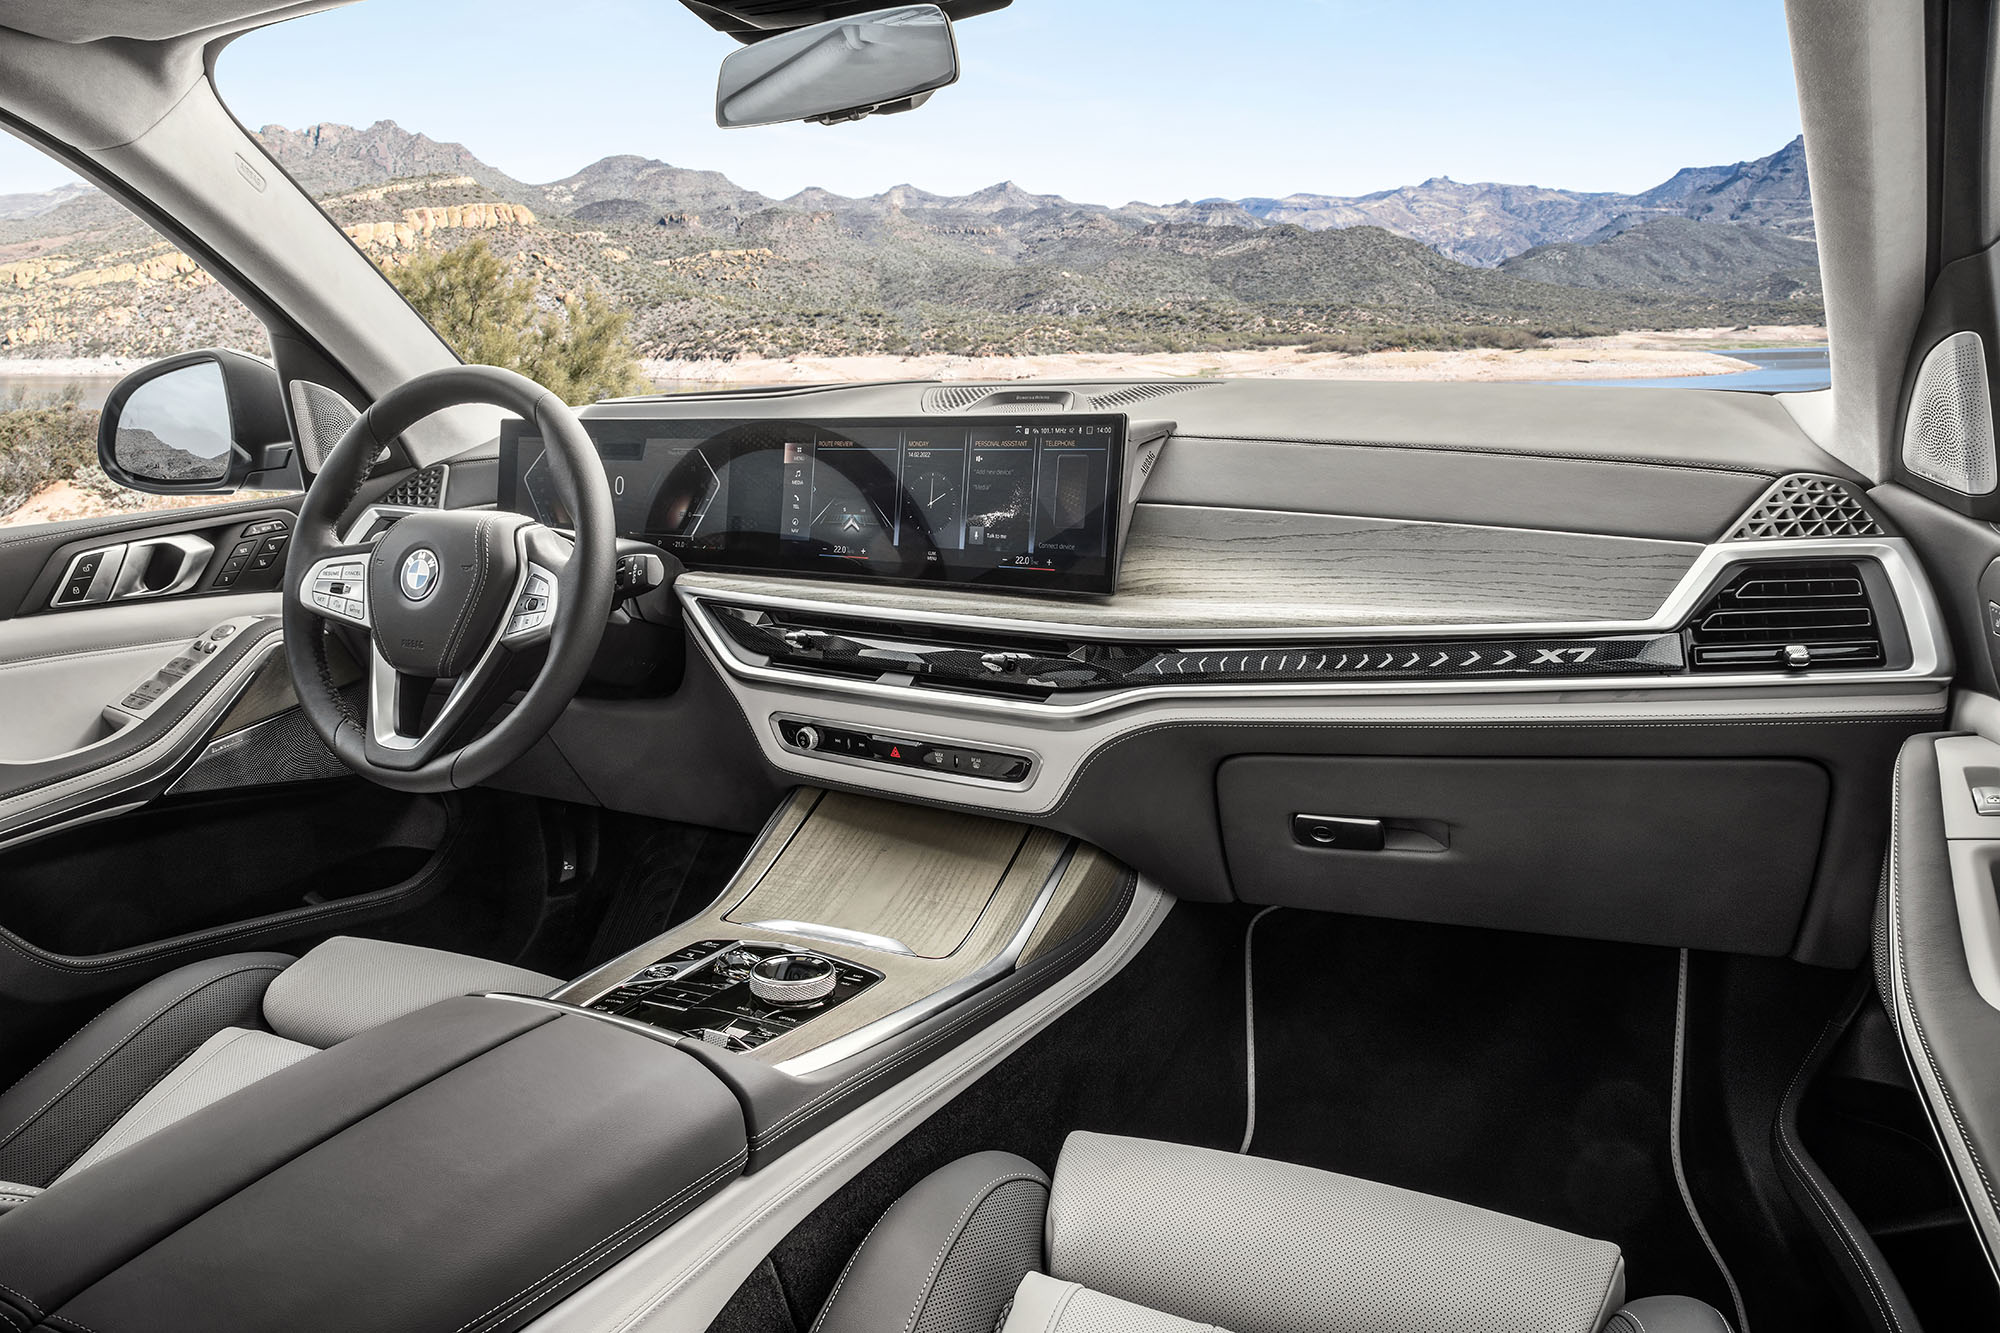 BMW X7 interior.